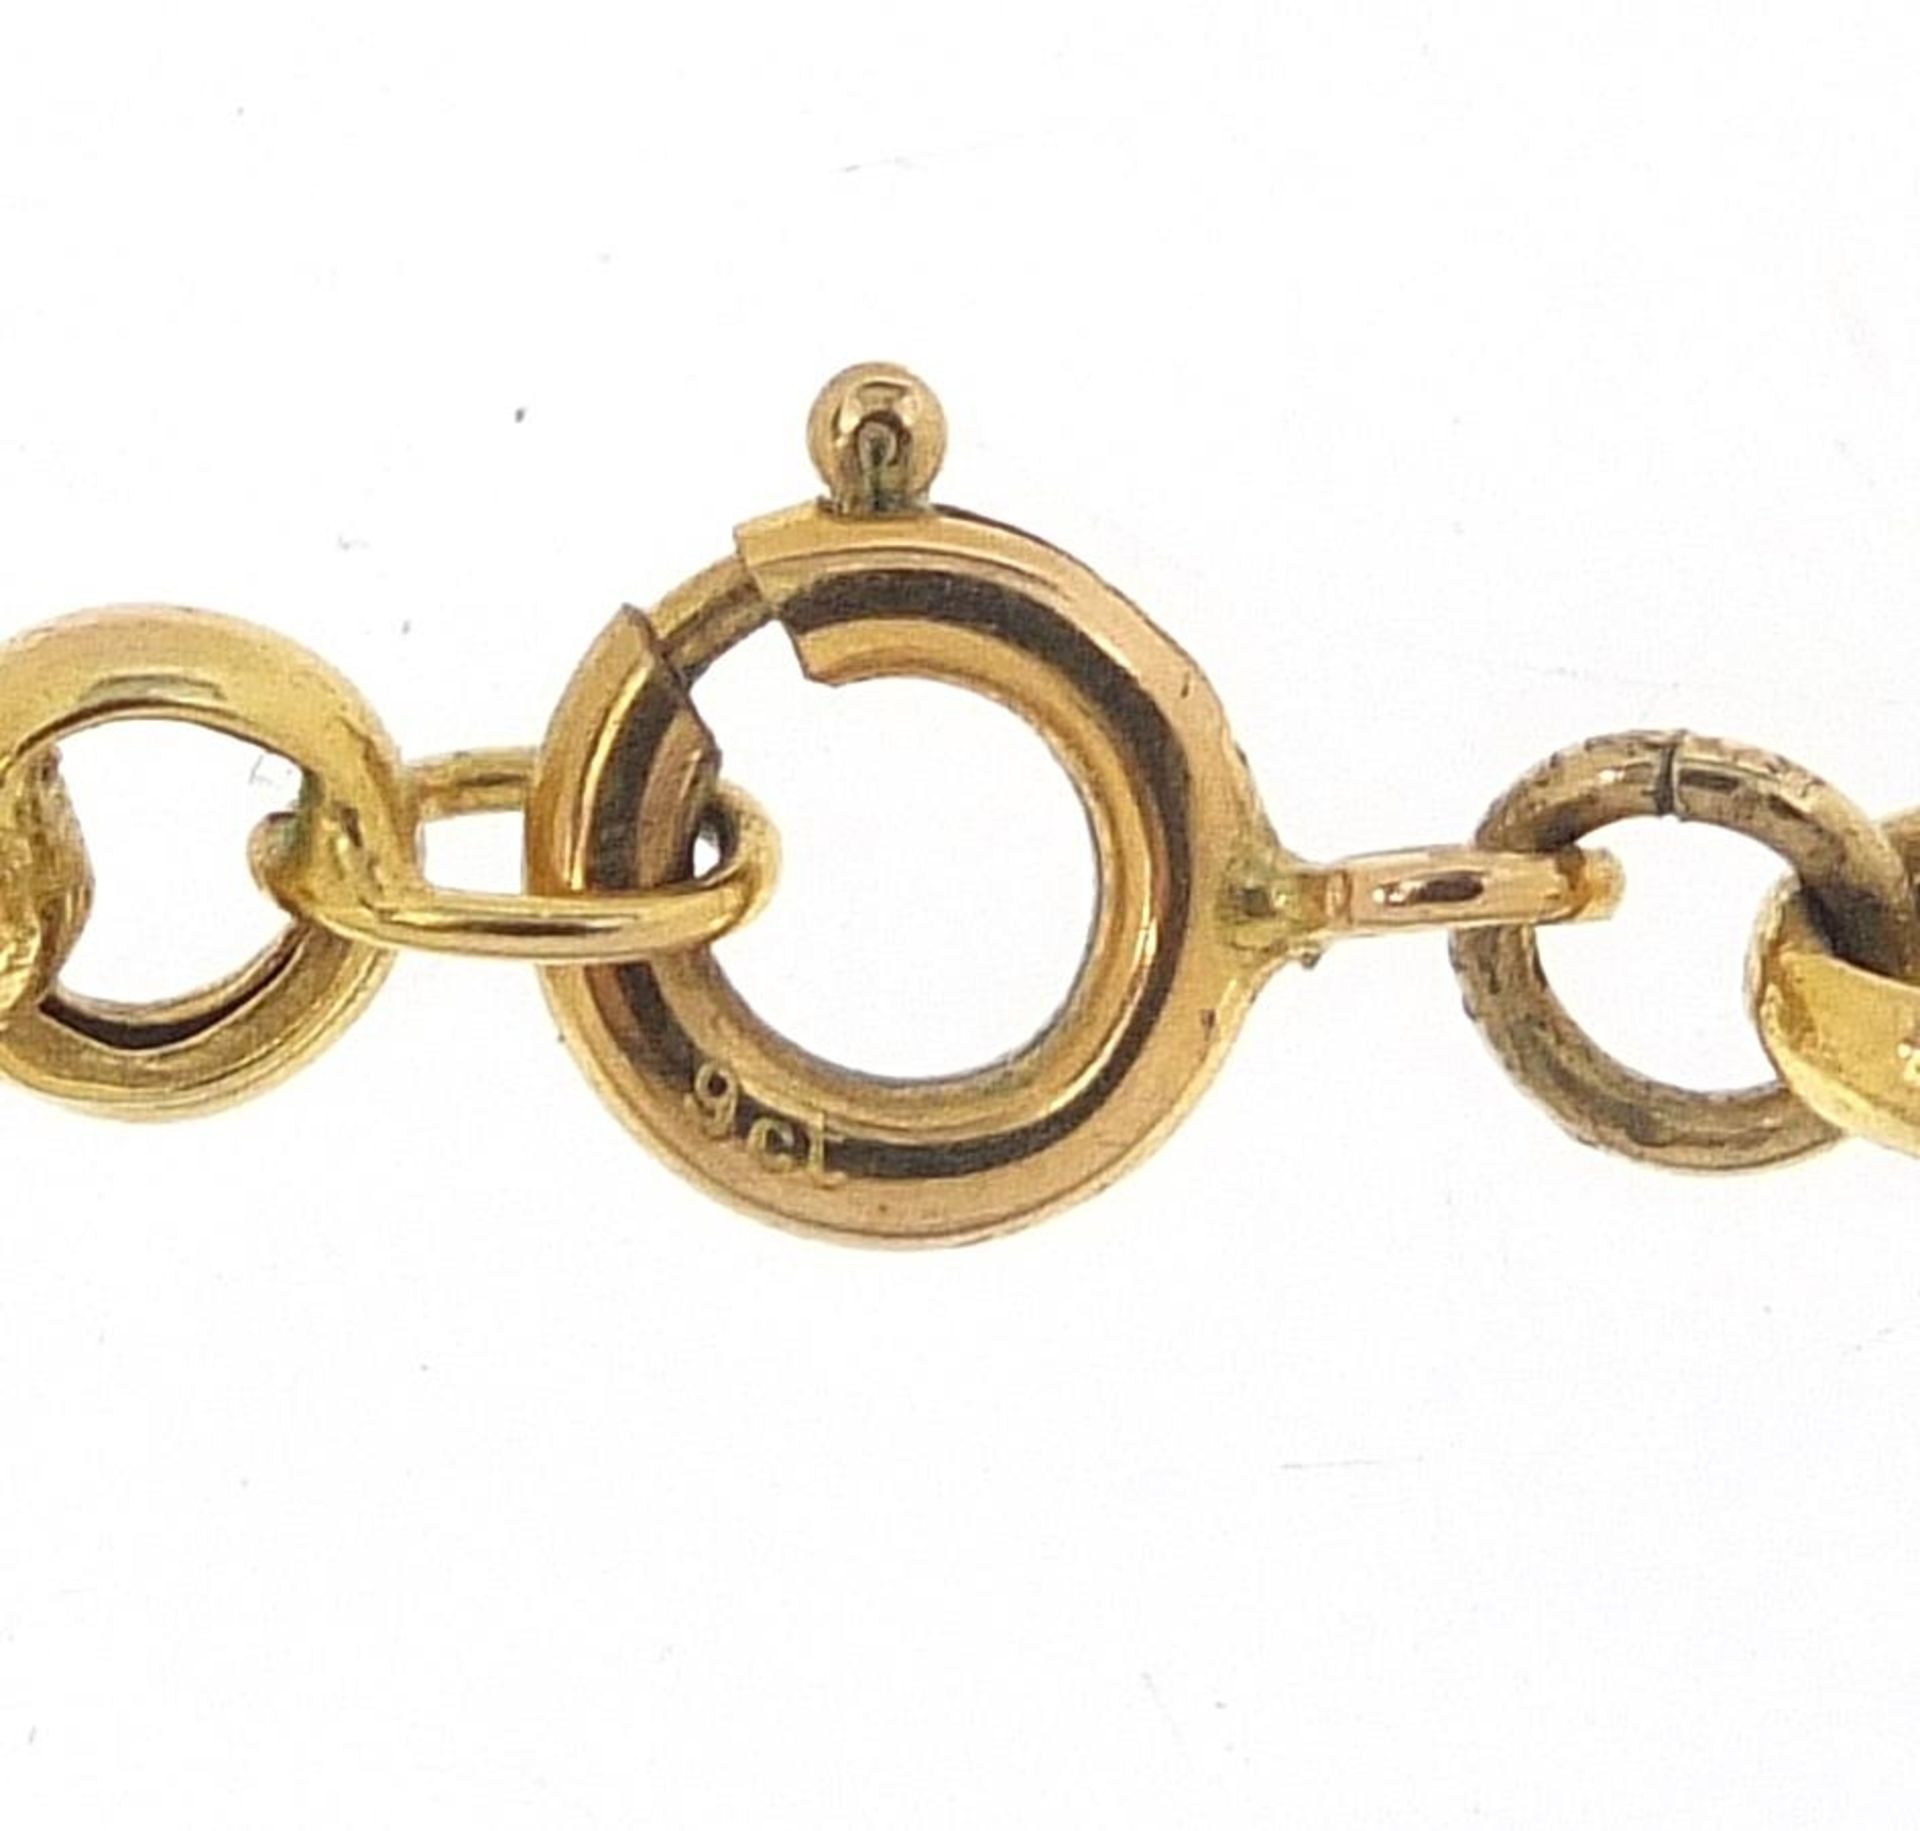 9ct gold Belcher link necklace, 42cm in length, 7.0g - Image 3 of 3